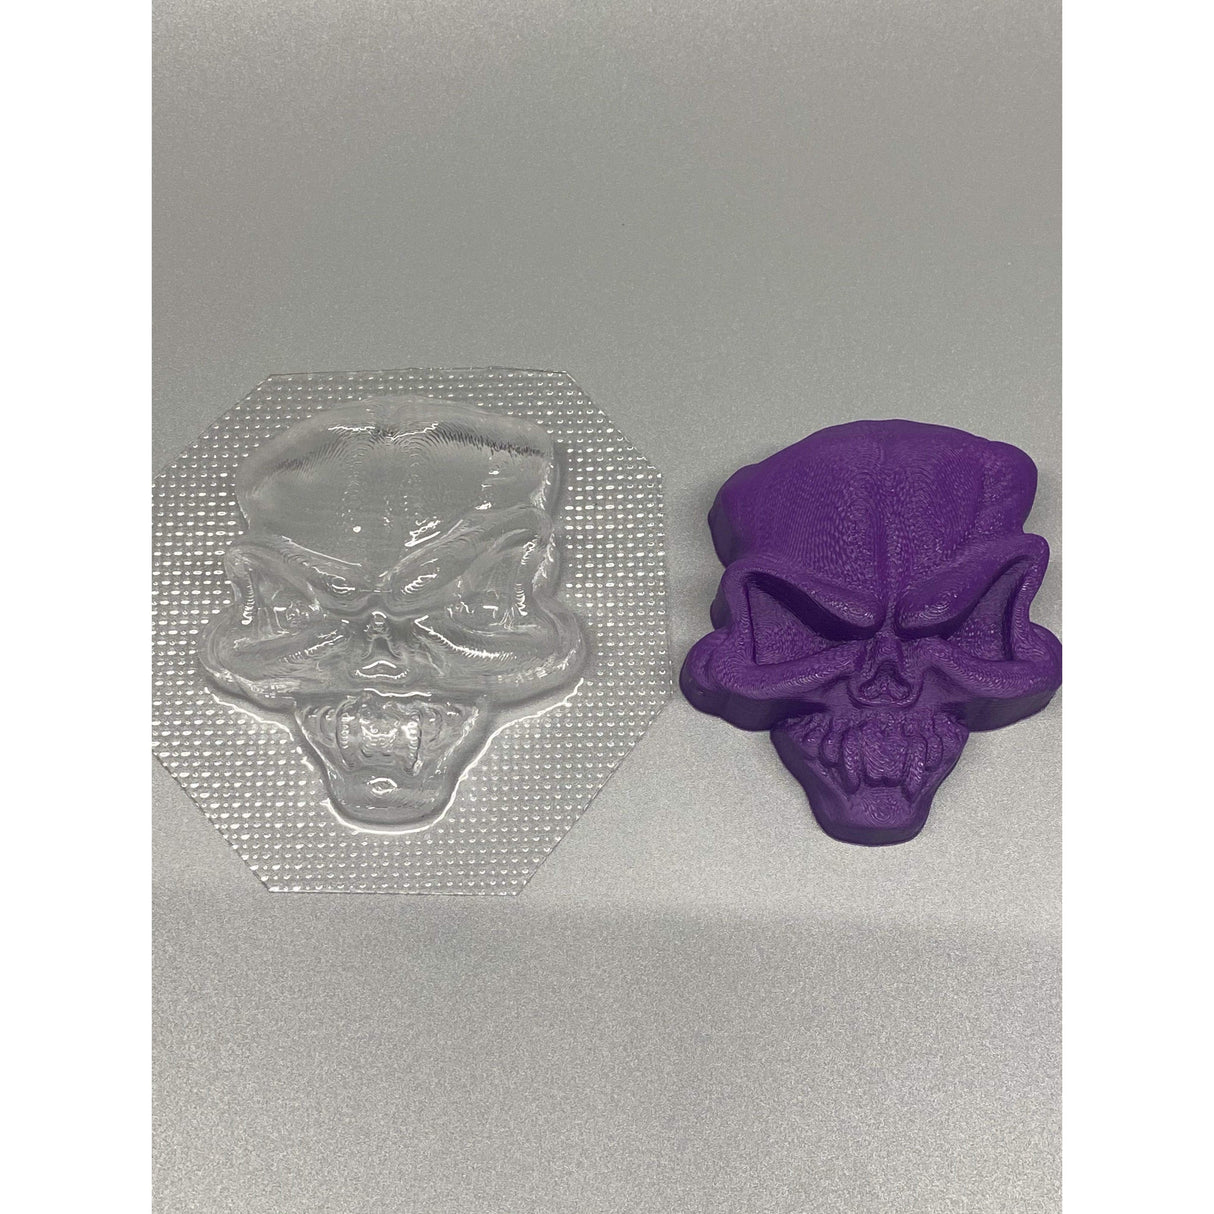 Evil Skull Plastic Hand Mold